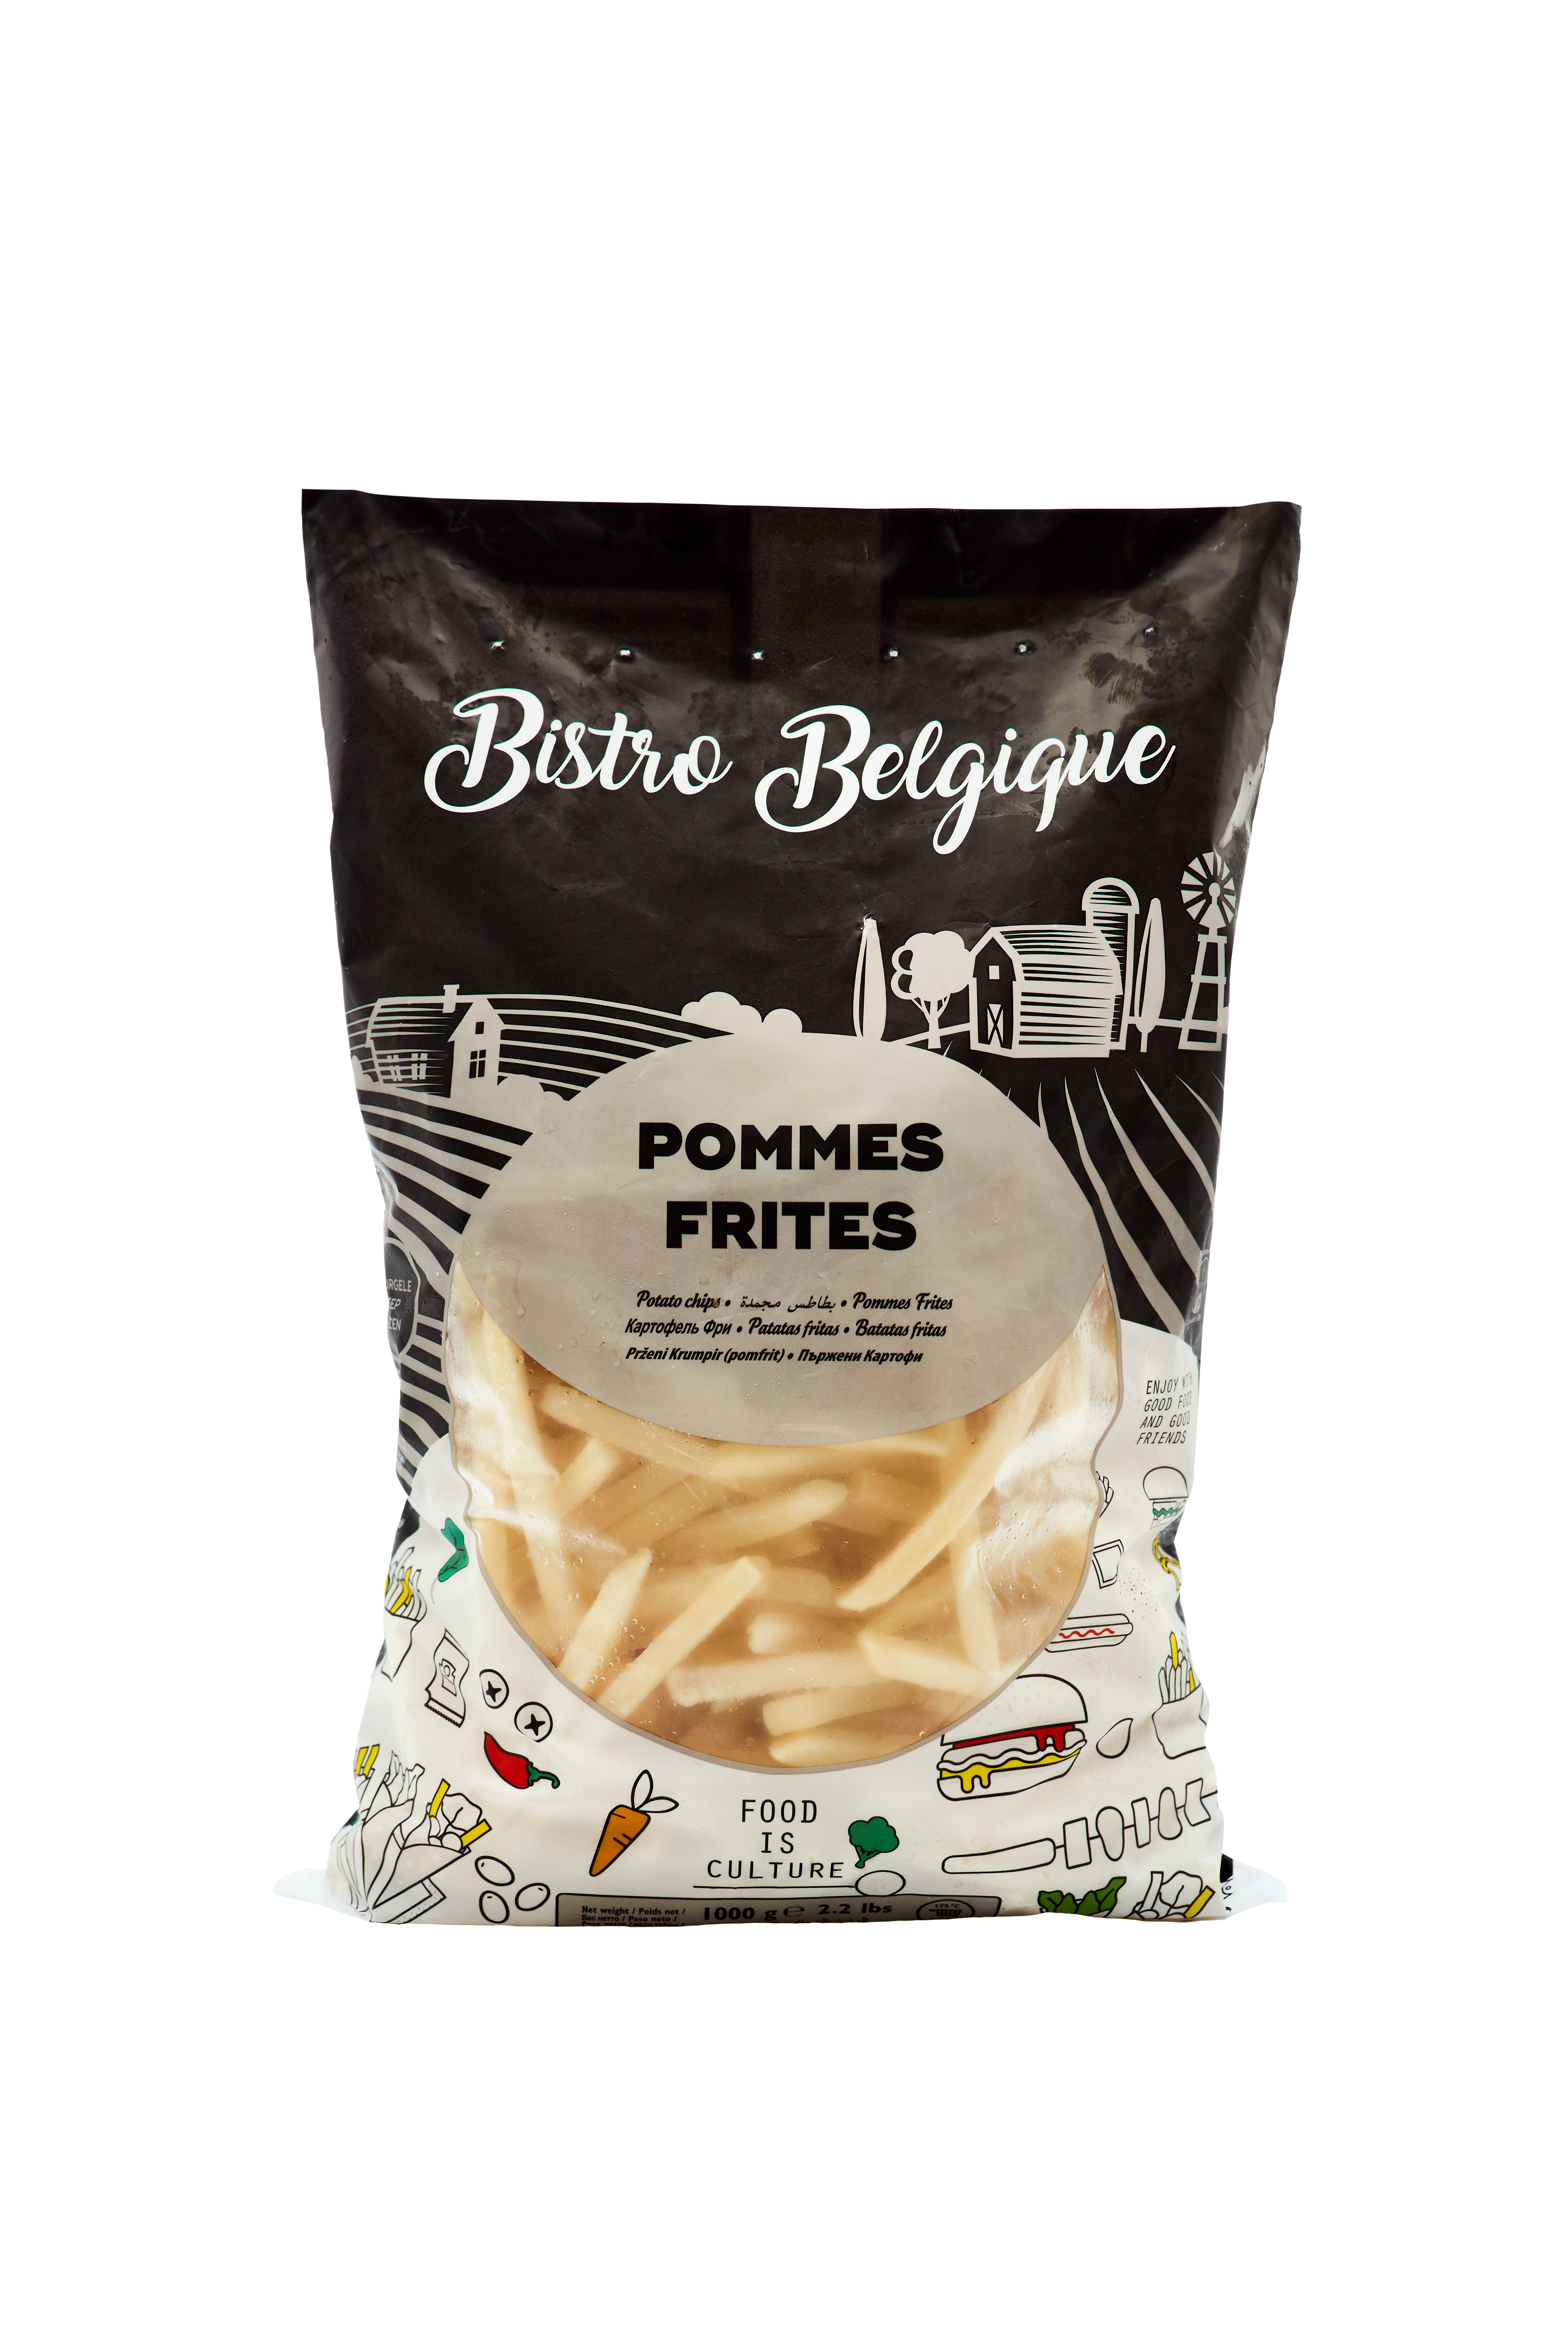 wedges skin off packaging Bistro Belgique brand